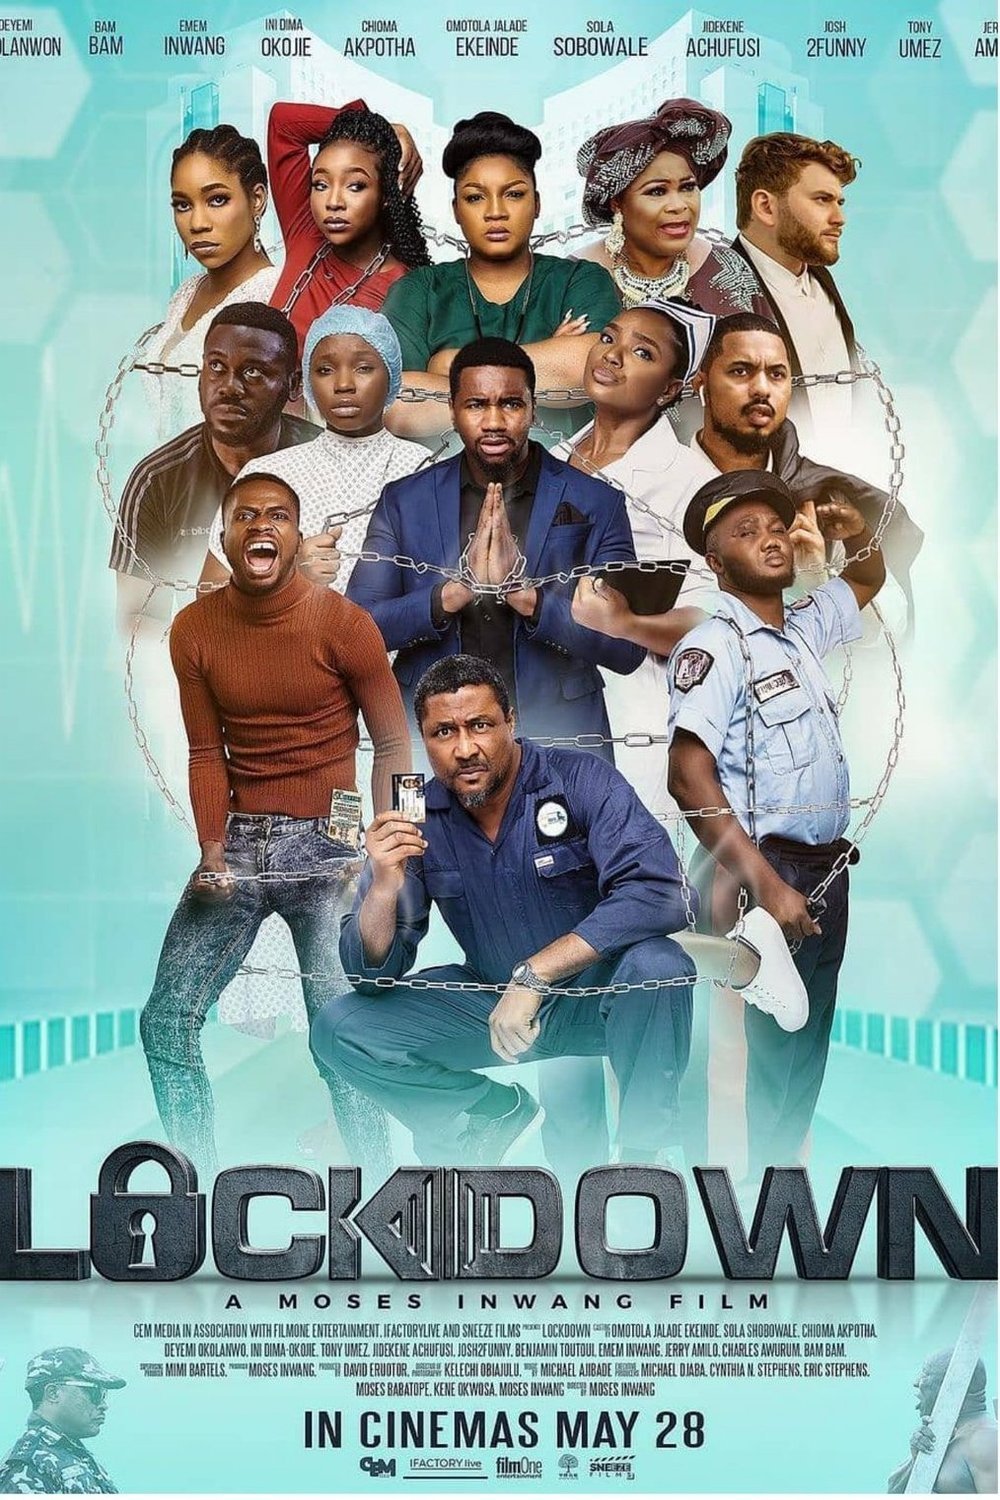 L'affiche du film Lockdown